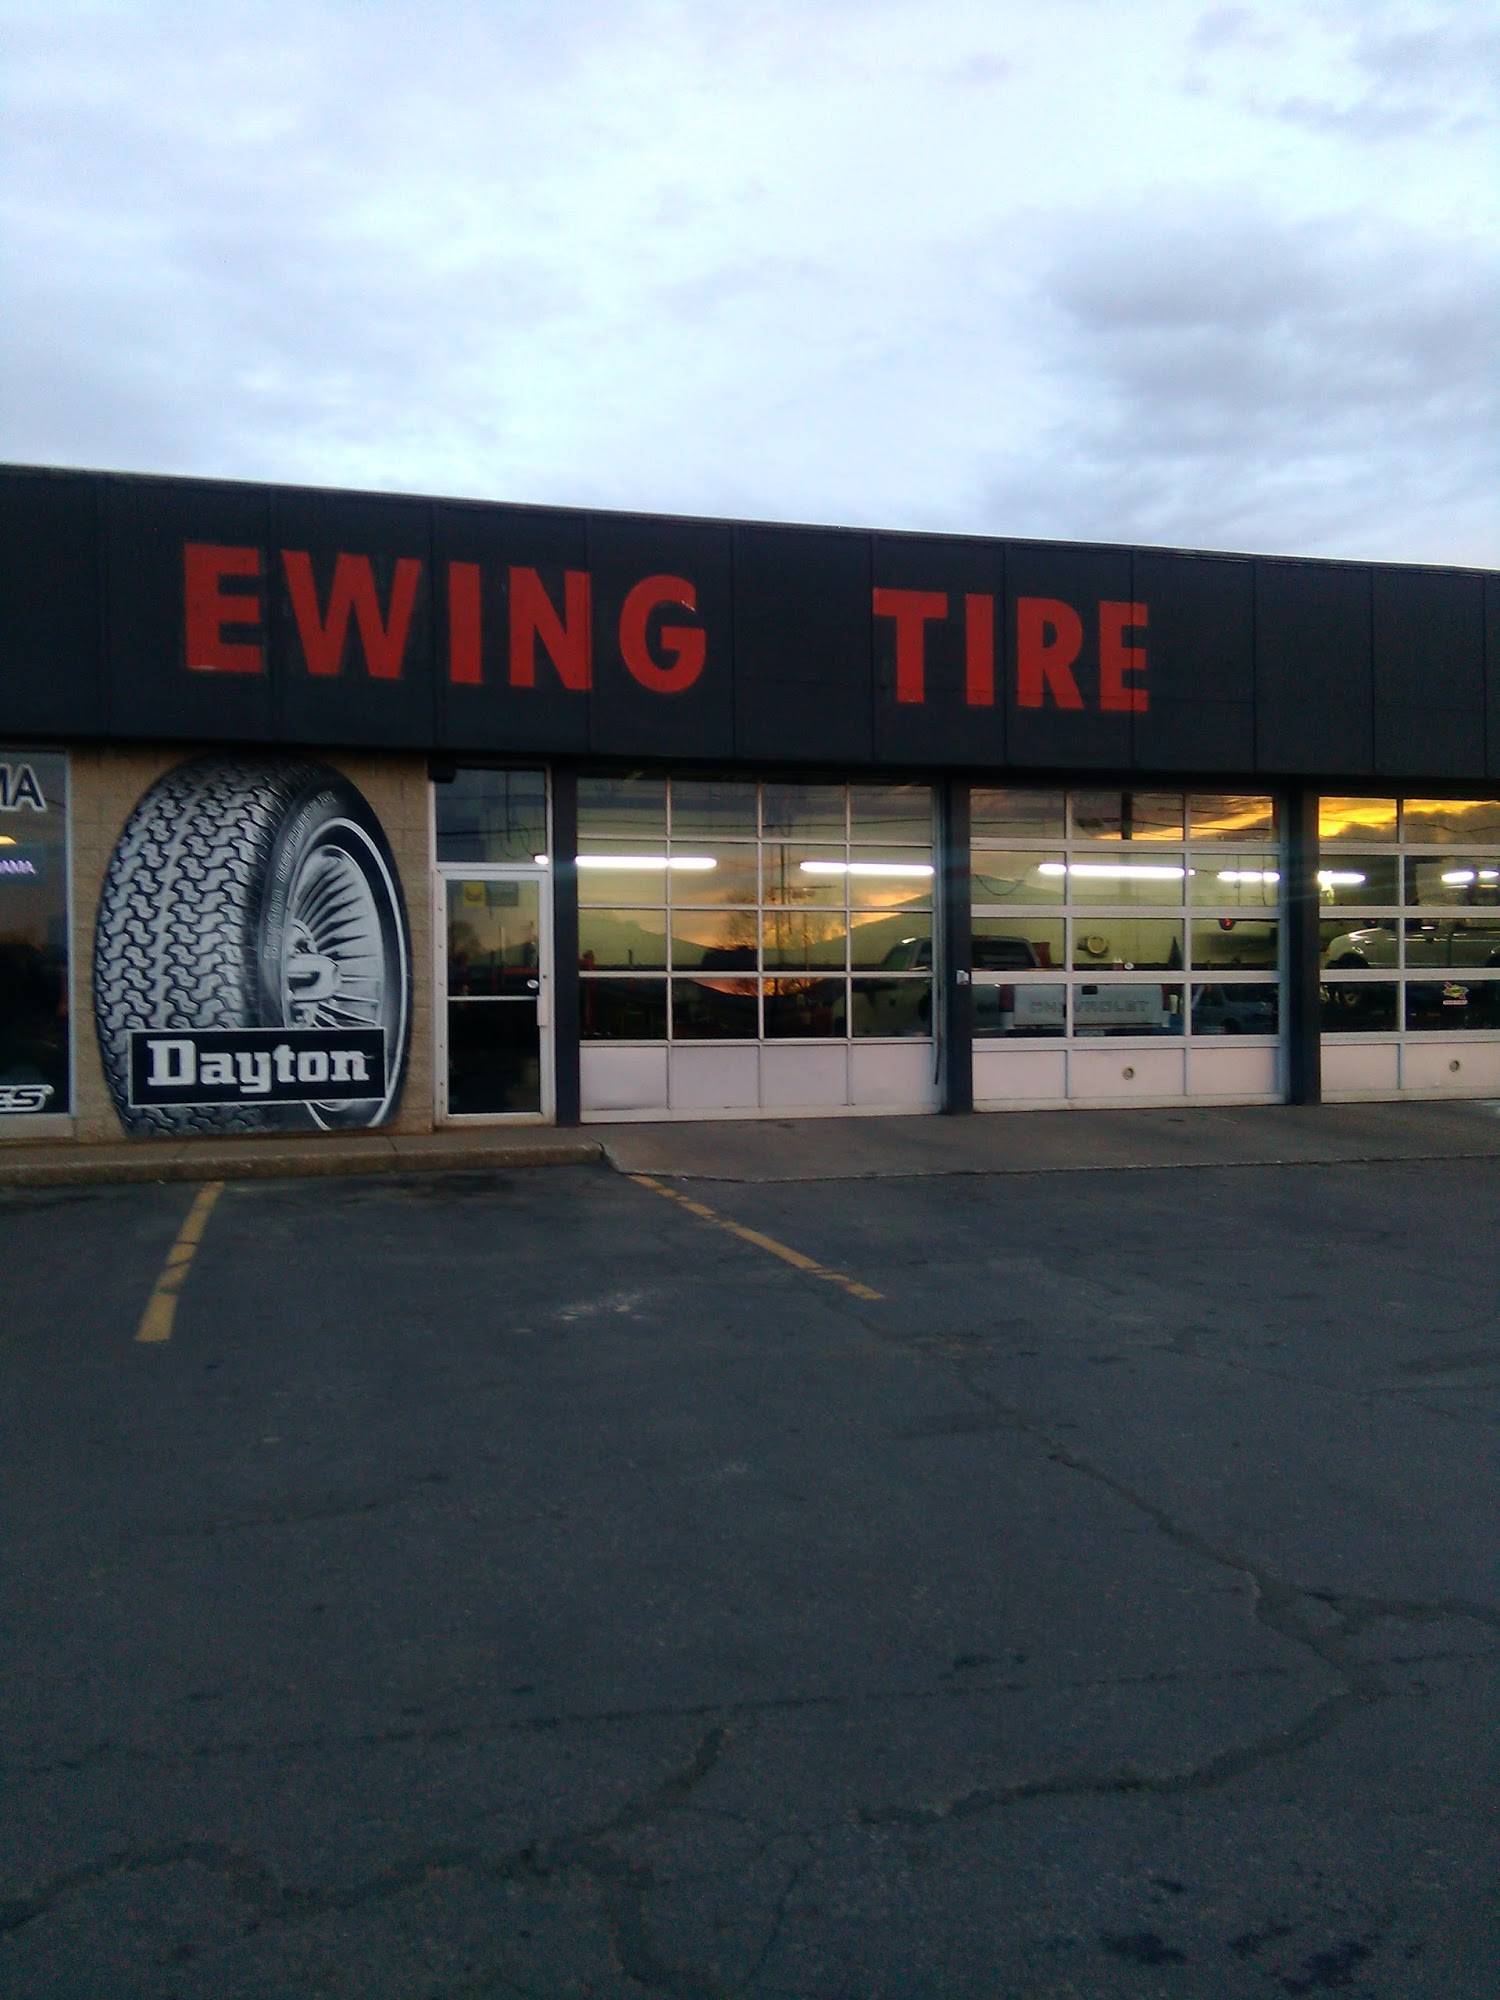 Ewing Tire Company